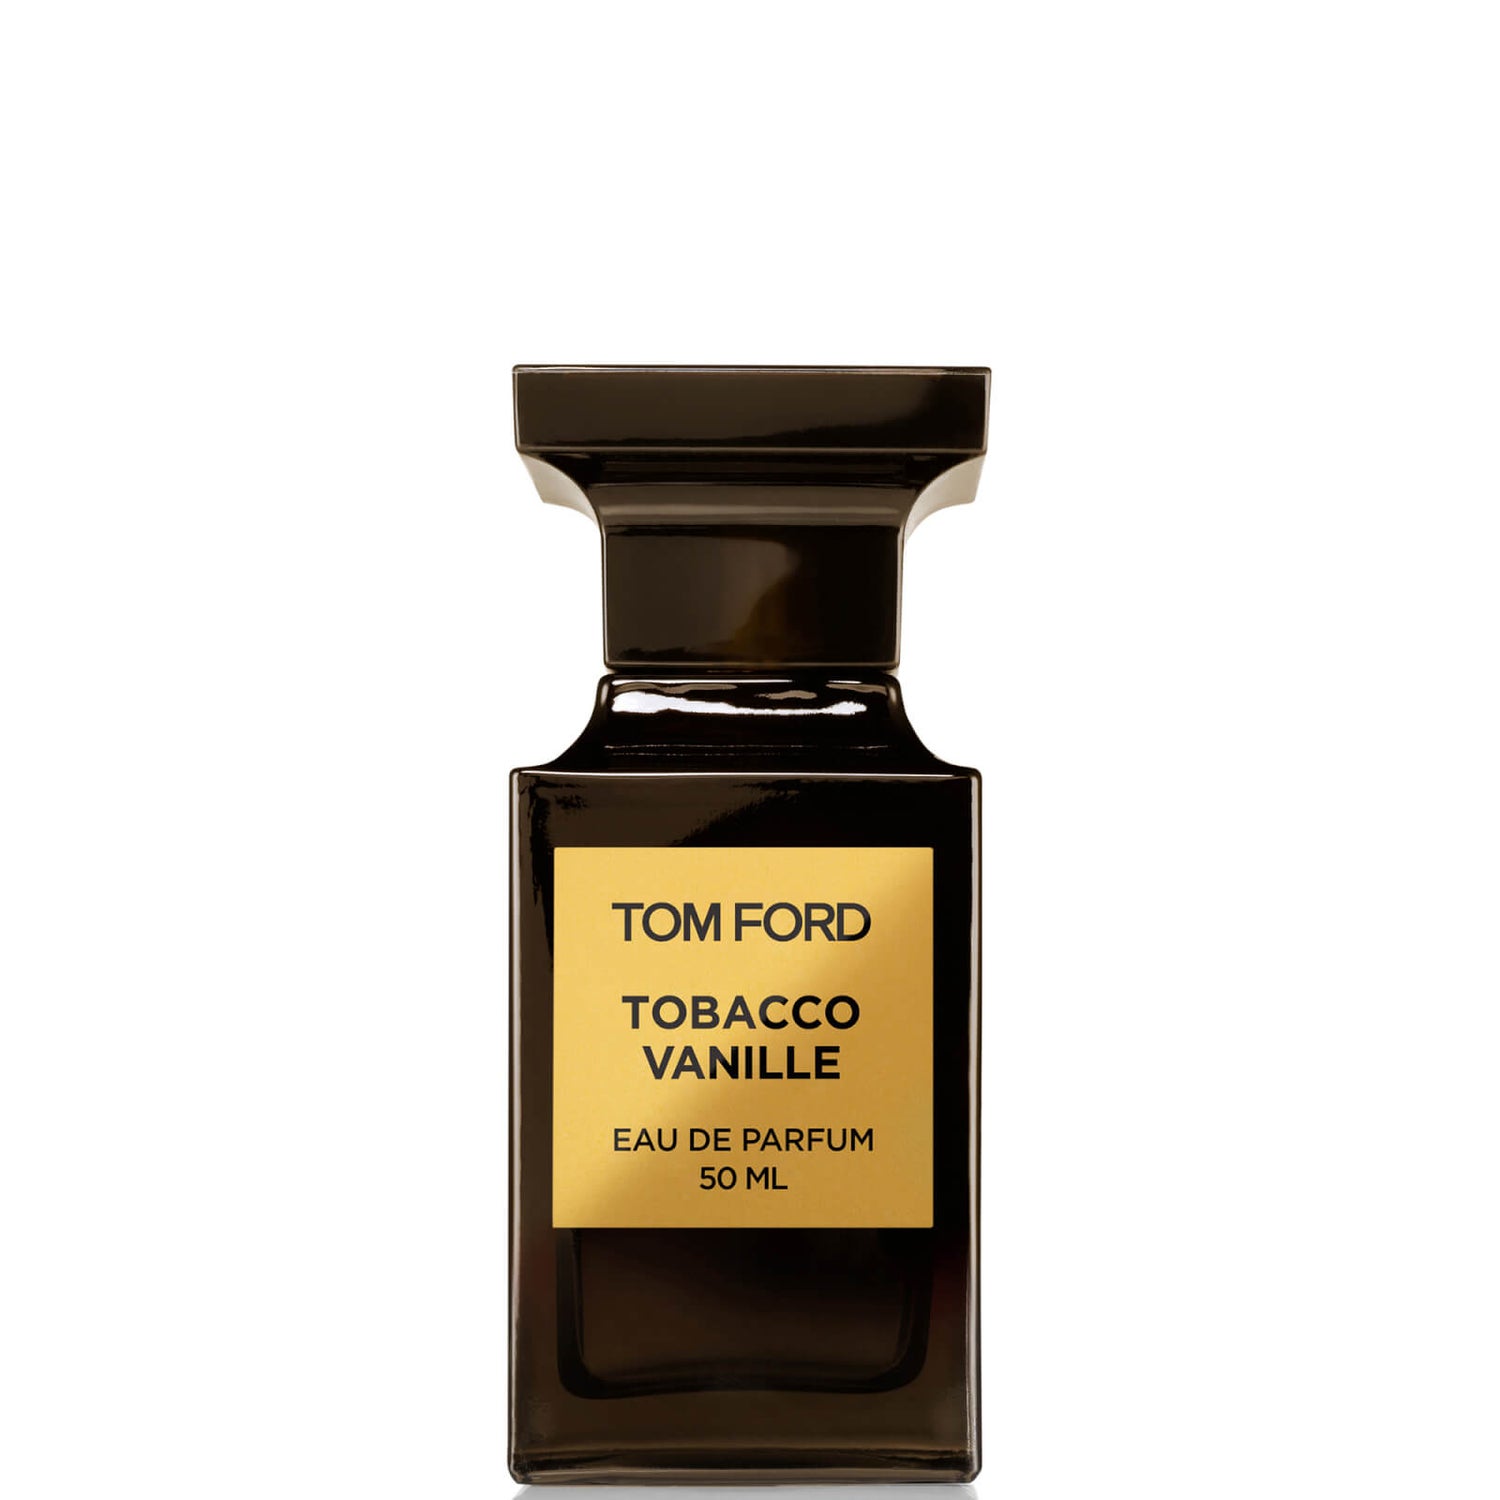 Tom Ford Tobacco Vanille Eau de Parfum Spray - 50ml Tom Ford Tobacco Vanille parfémovaná voda ve spreji - 50 ml